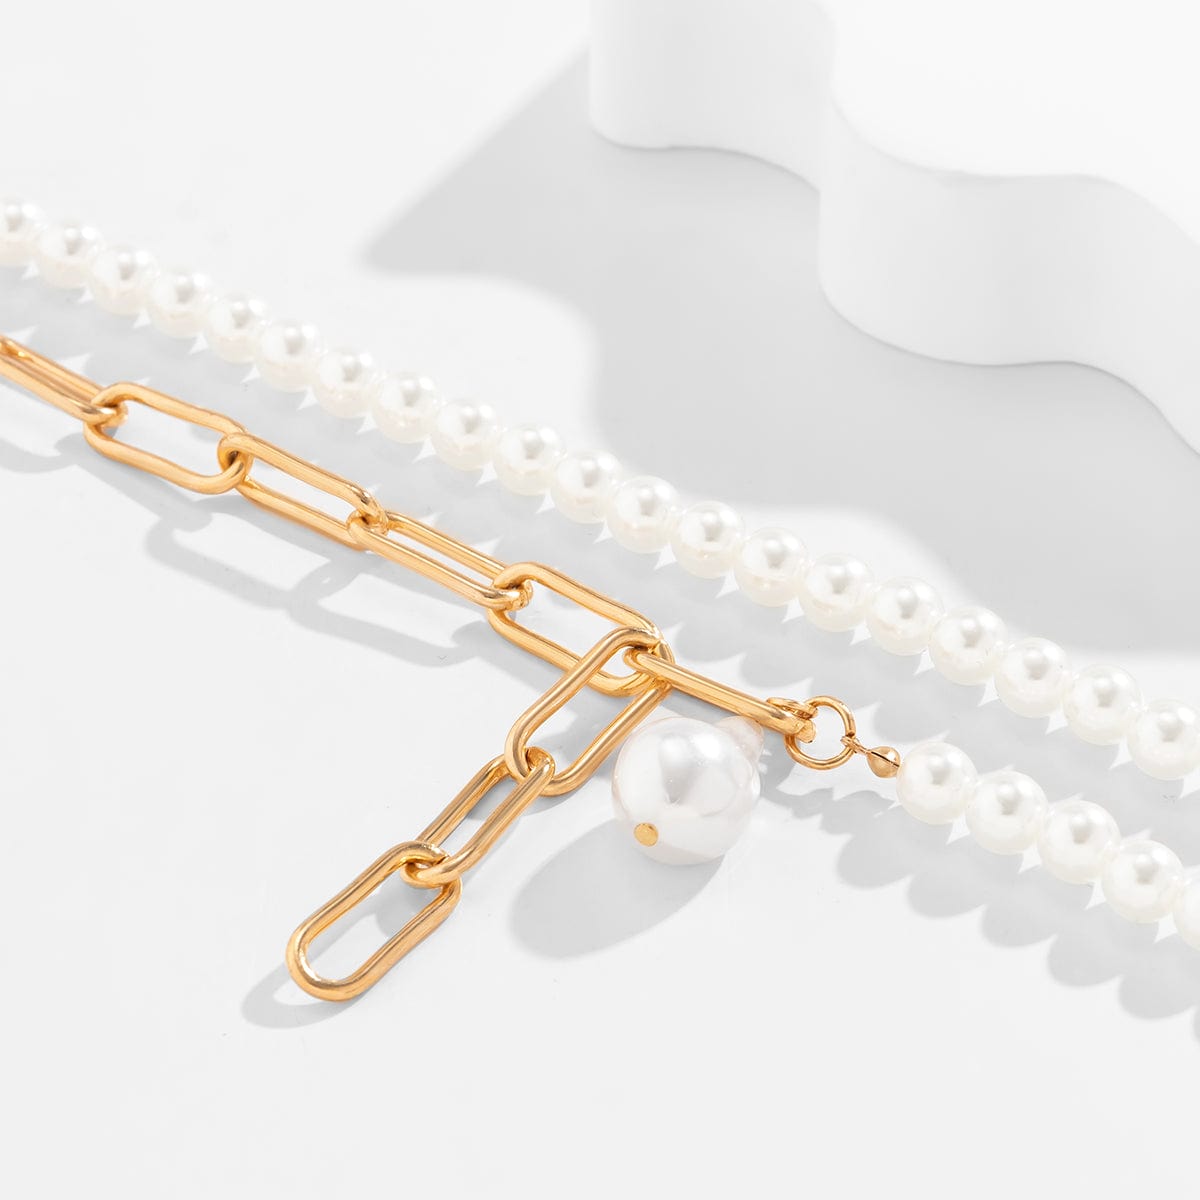 Bohemia Layered Paperclip Pearl Chain Choker Necklace Set - ArtGalleryZen